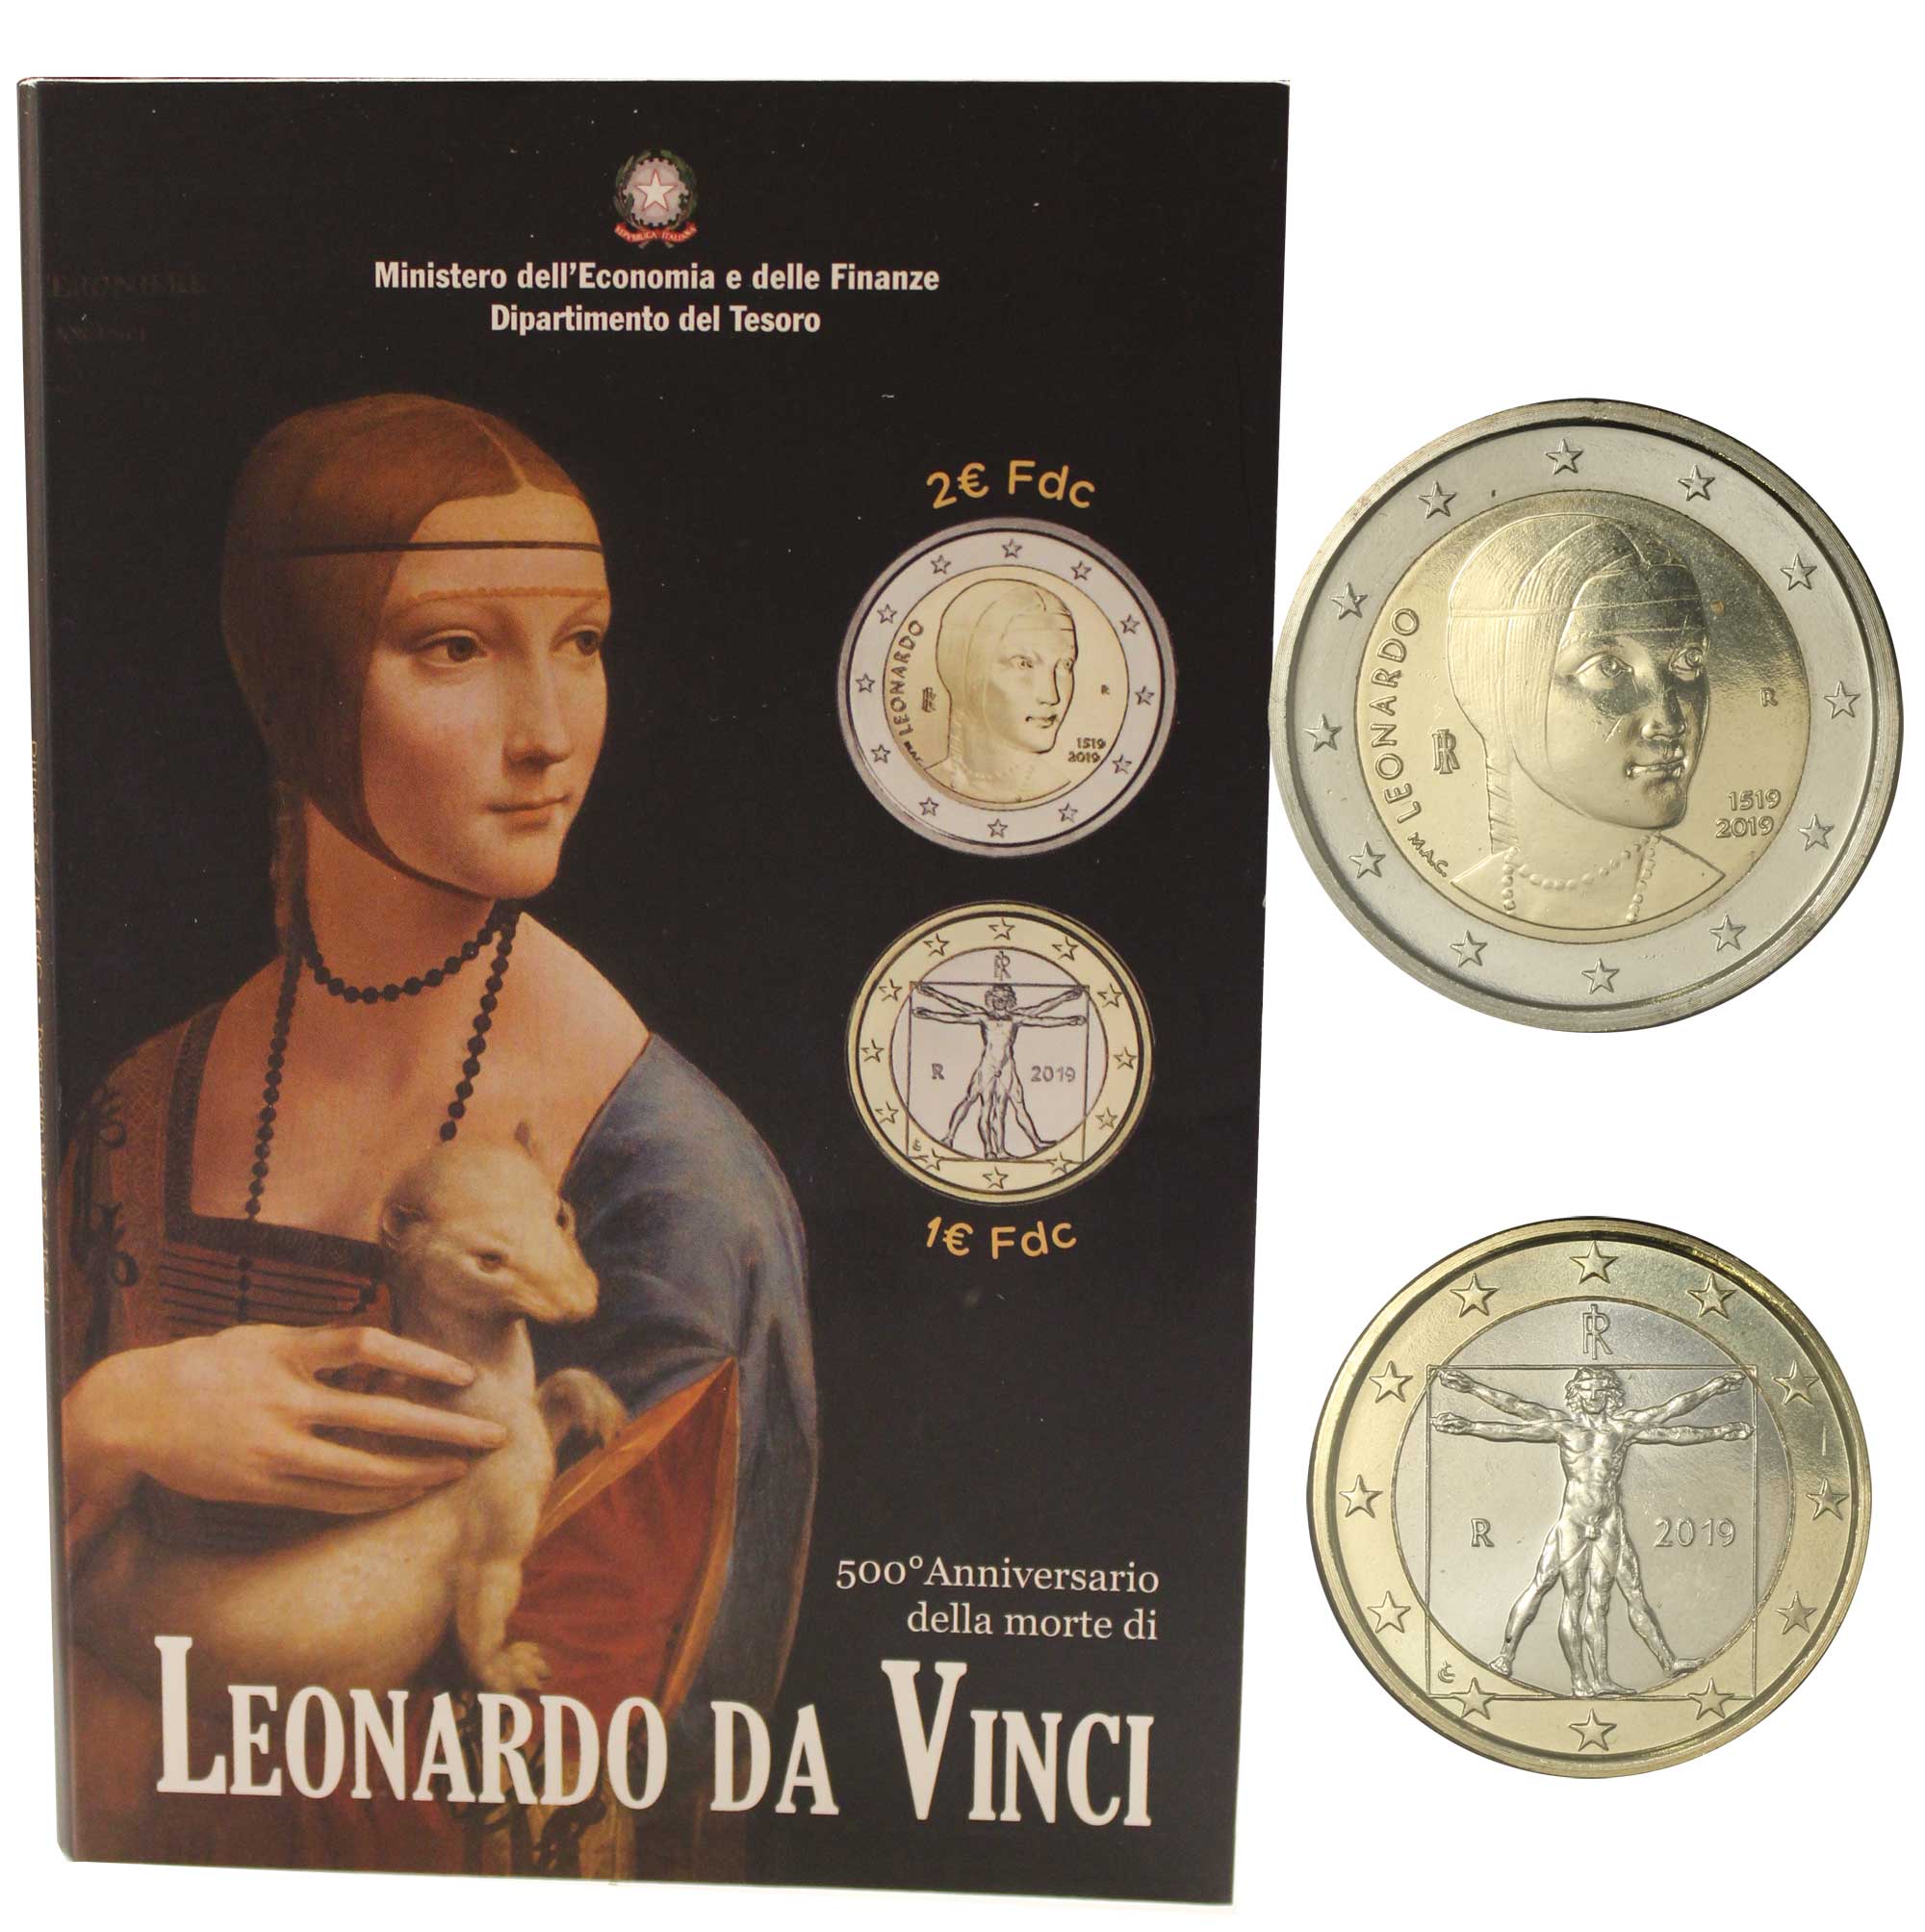 "Leonardo da Vinci" - dittico moneta da 2 euro e 1 euro in folder ufficiale